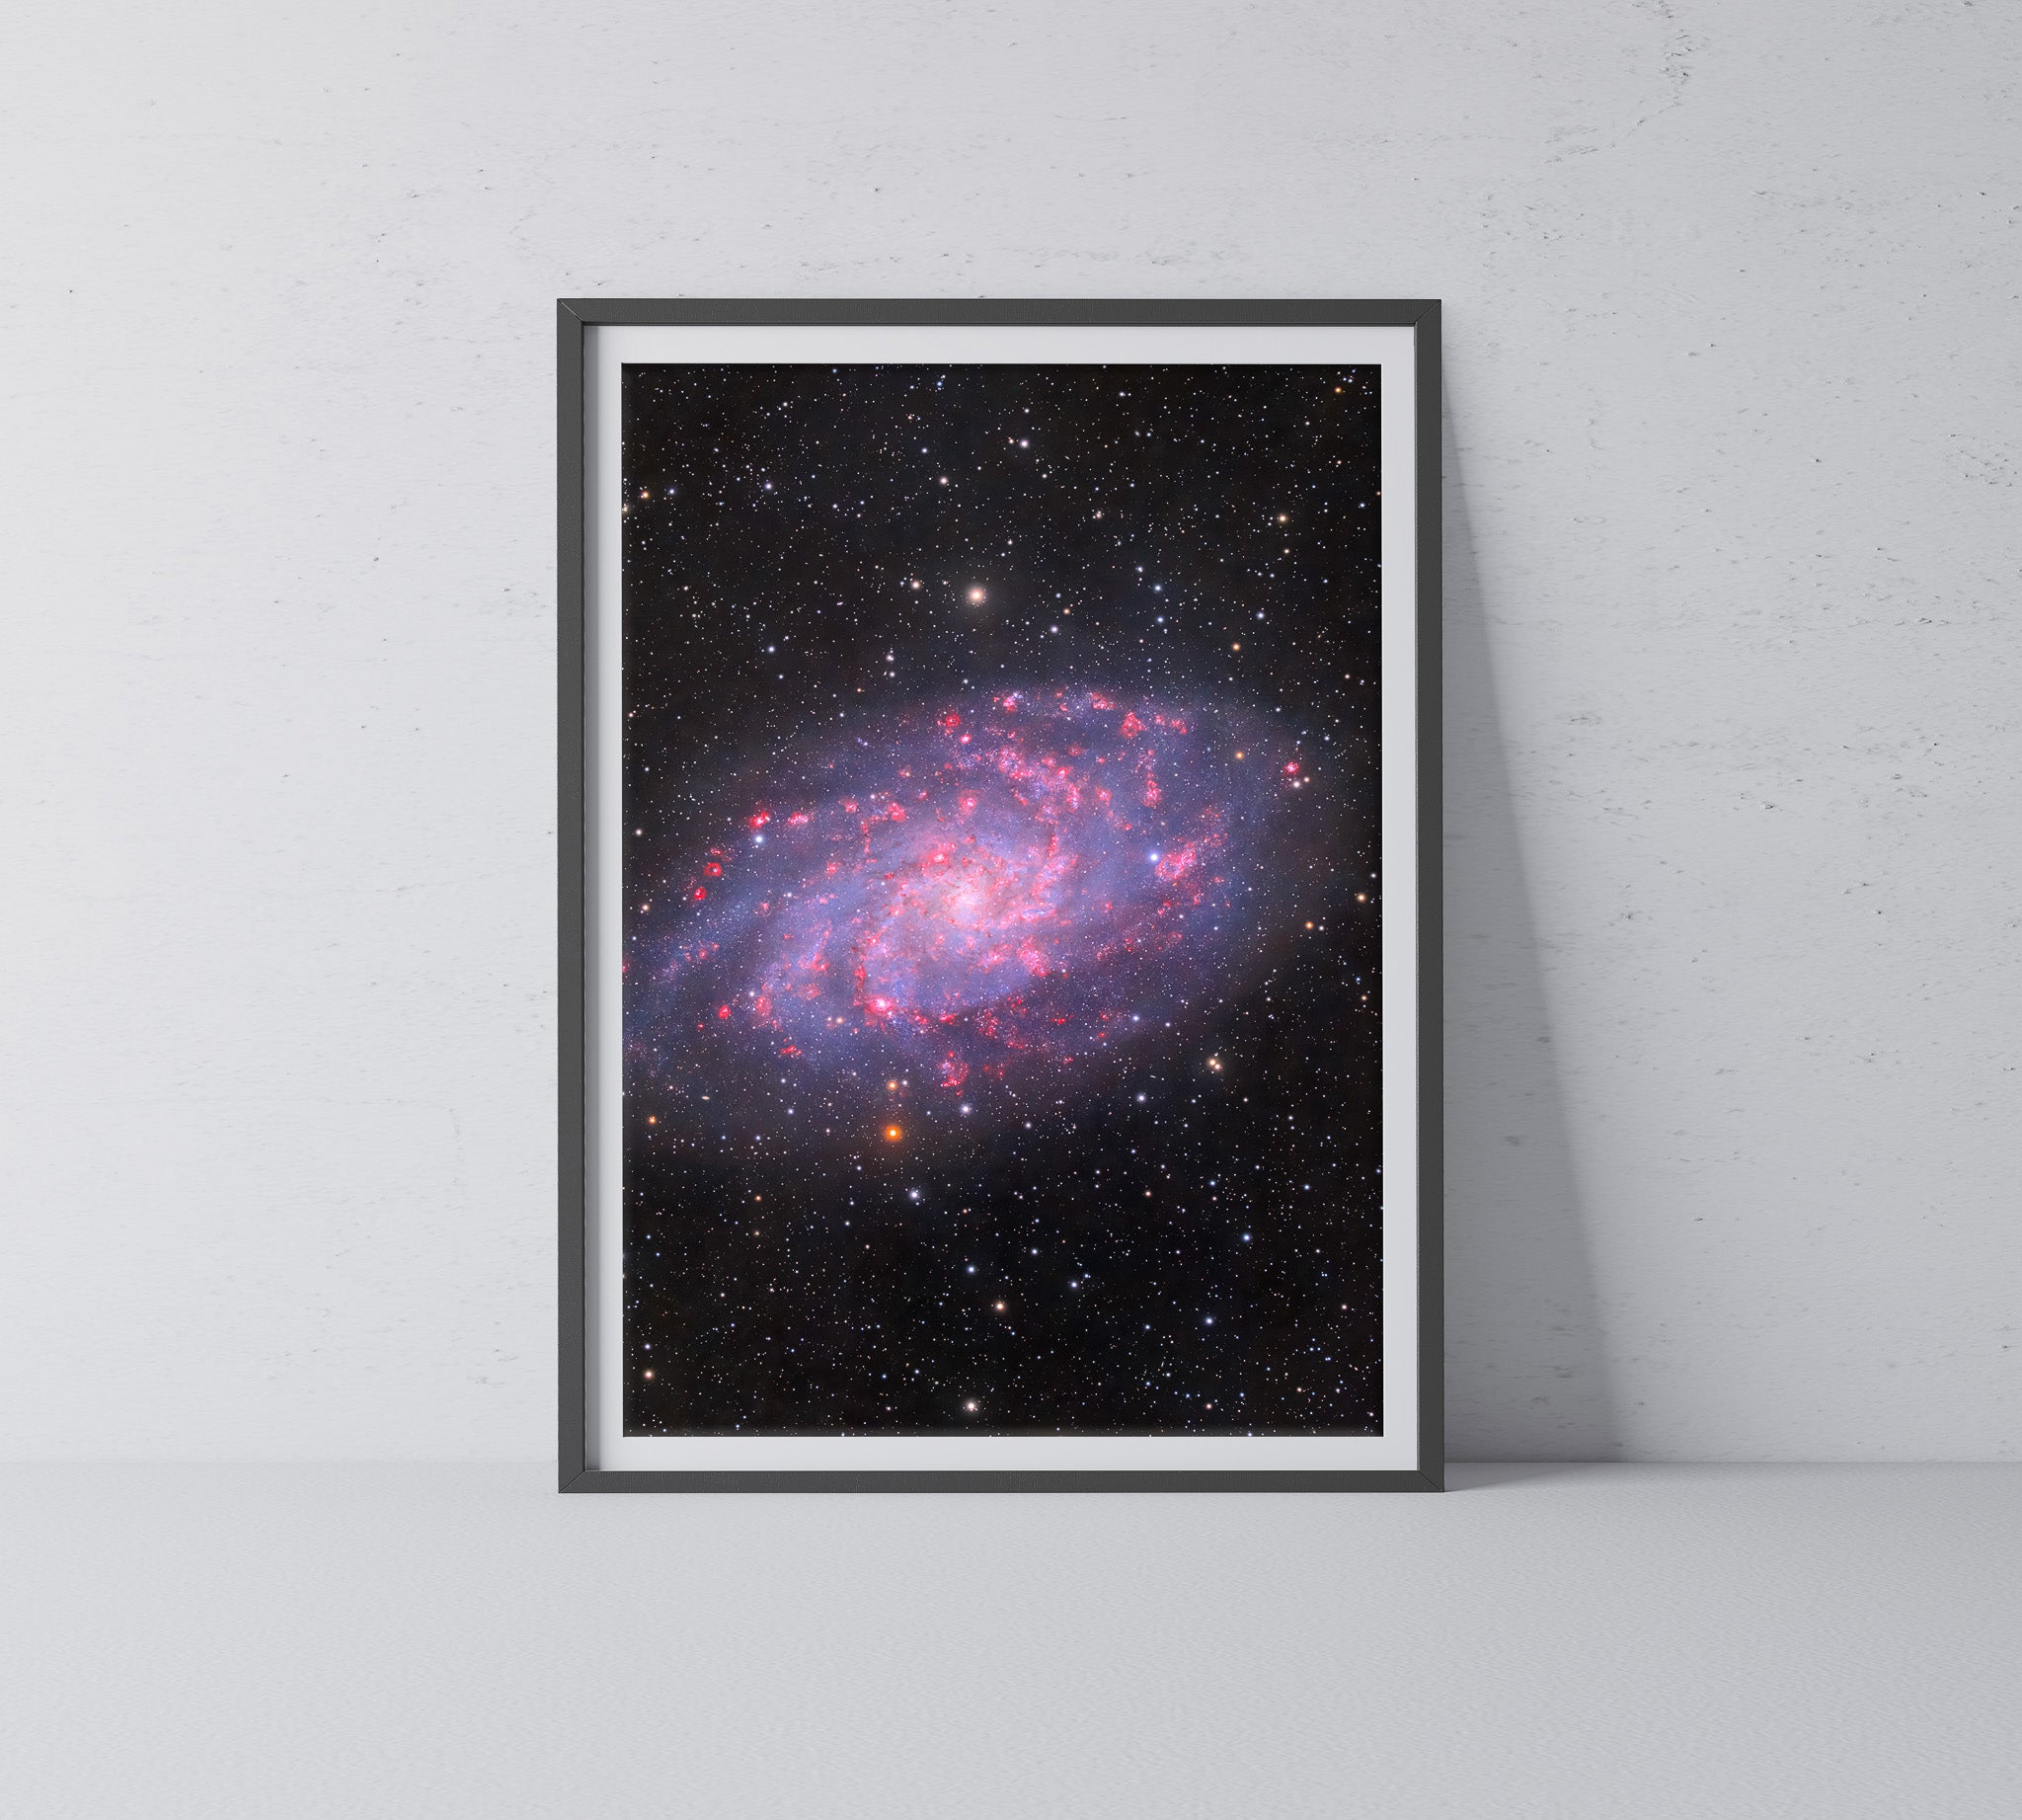 Triangulum Galaxy - M33